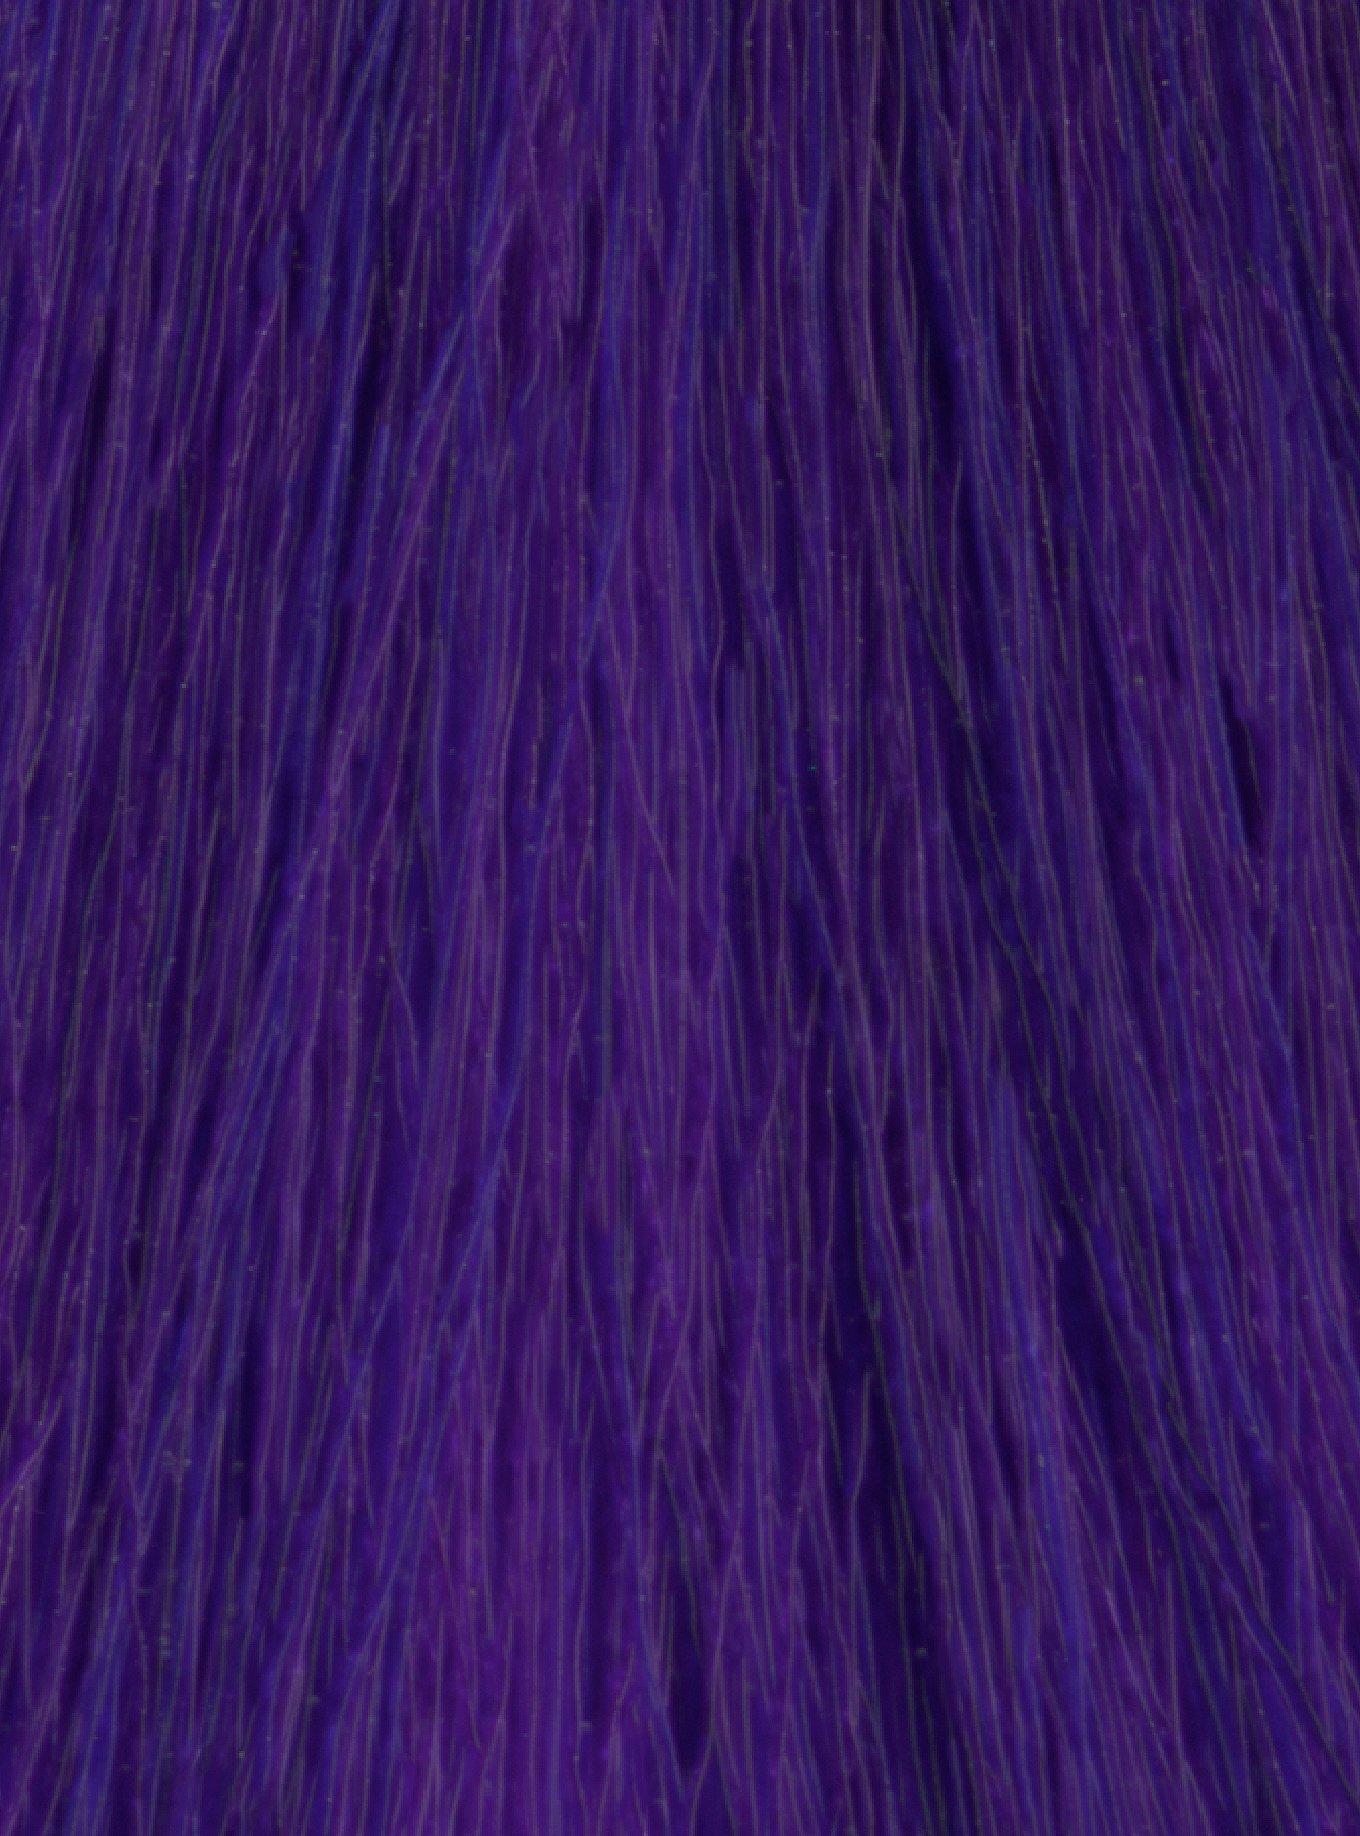 Manic Panic Formula 40 Knight Bright Purple Semi-Permanent Hair Dye Hot Topic Exclusive, , alternate